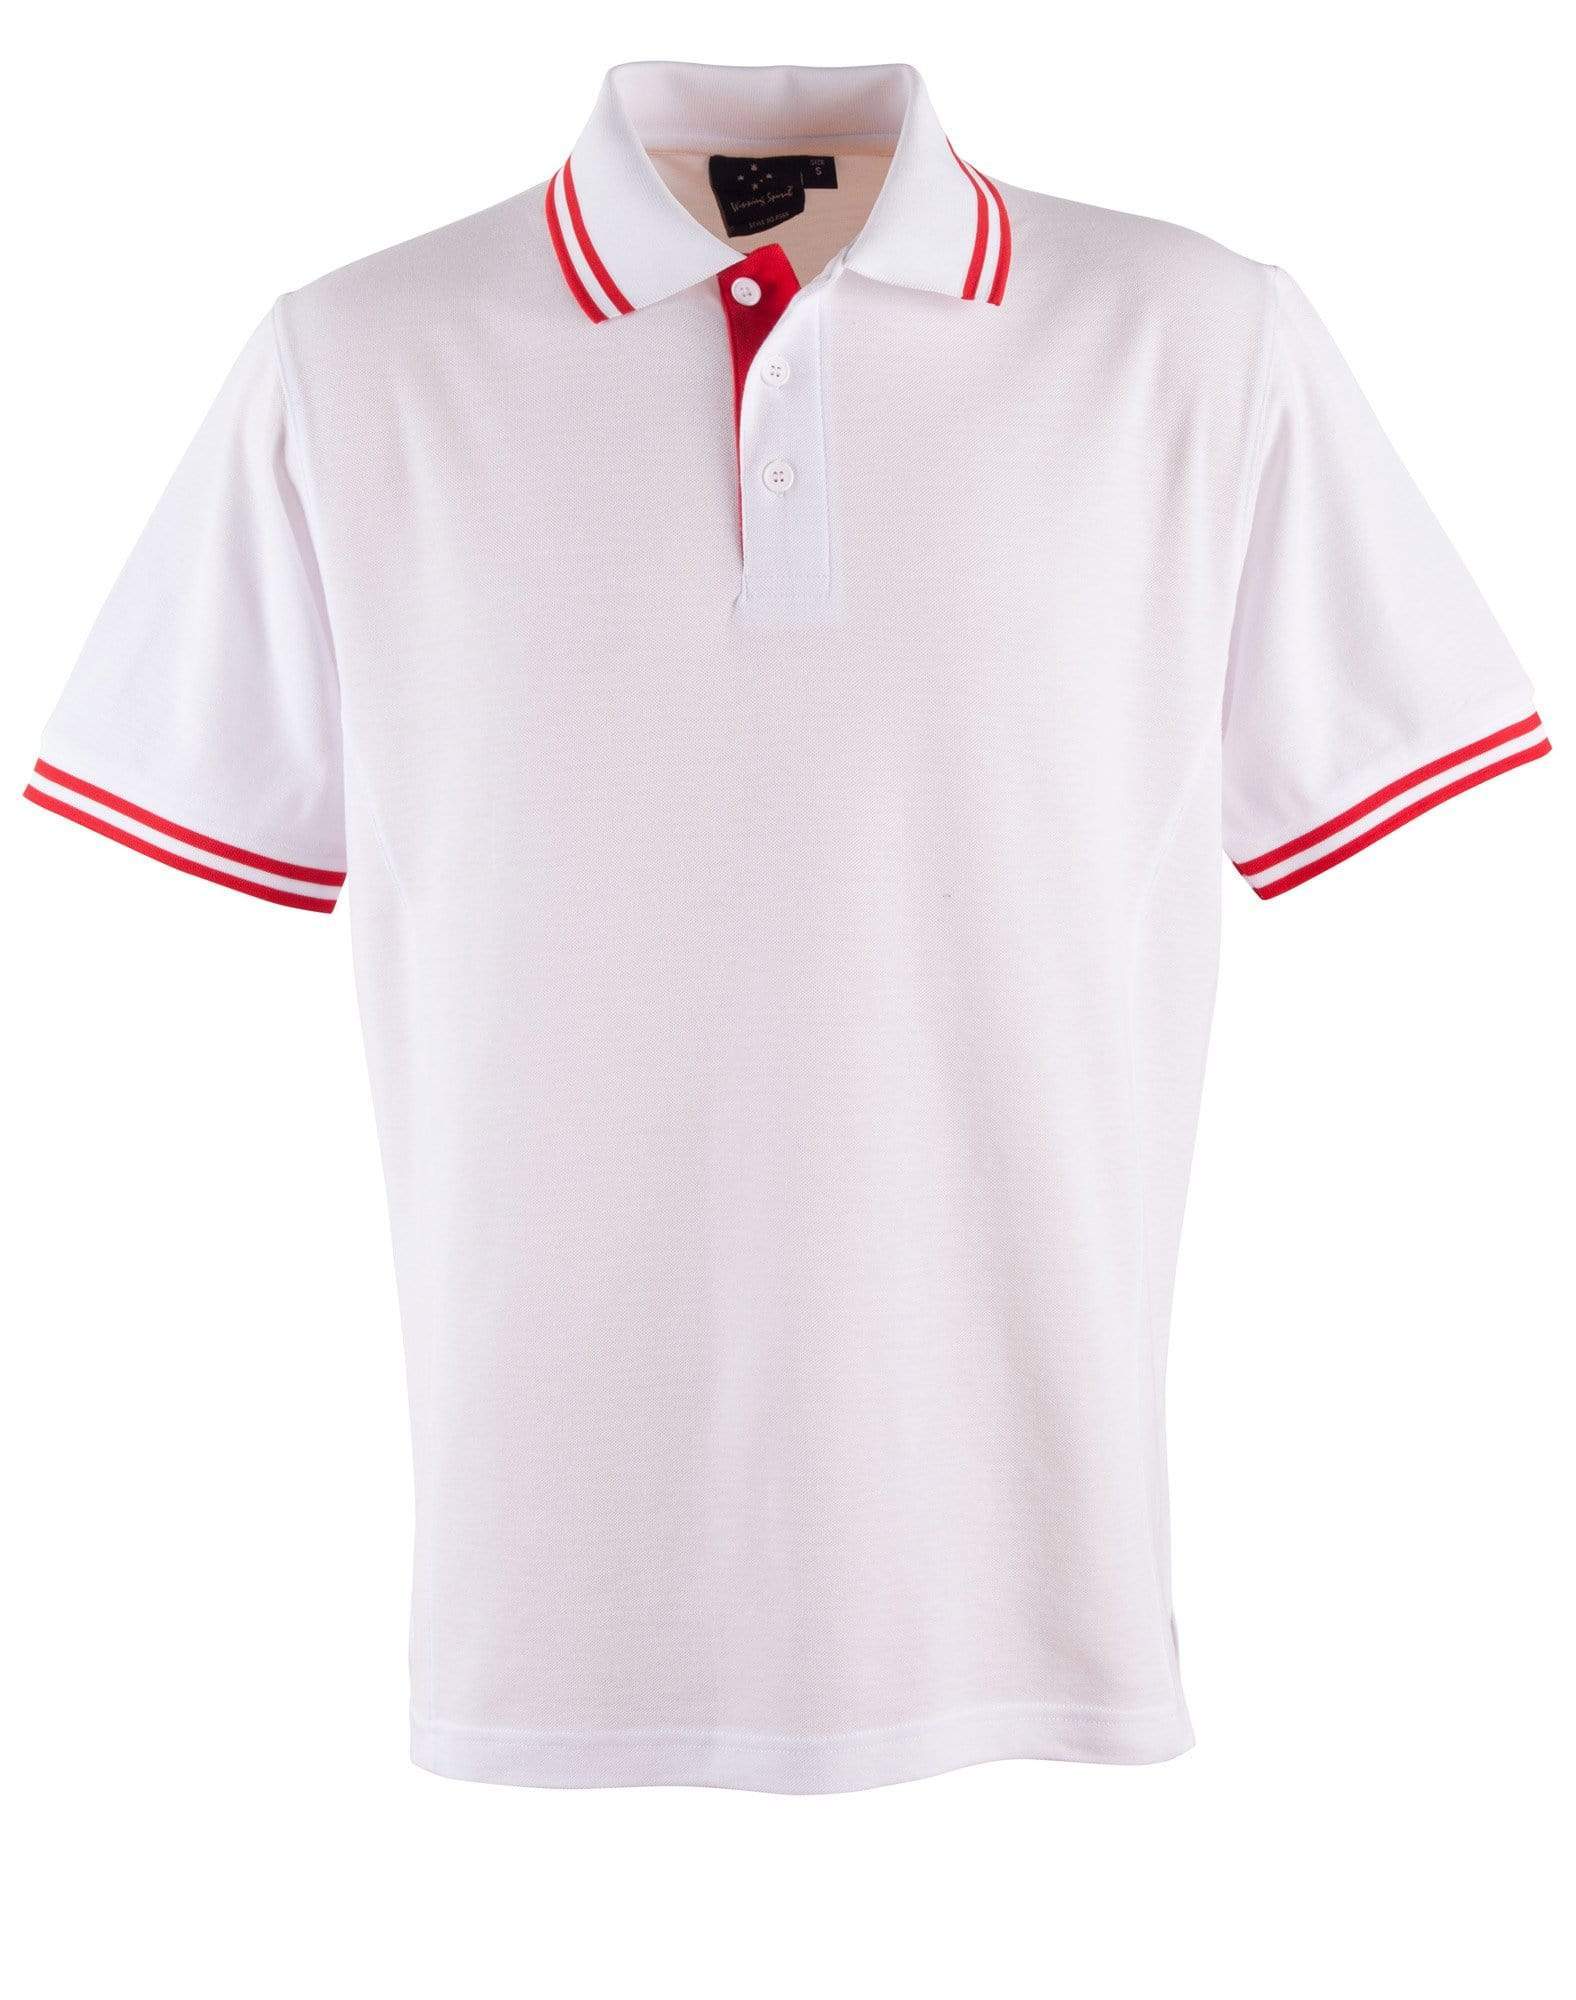 Grace Polo Men's Ps65 Casual Wear Winning Spirit White/Red S 